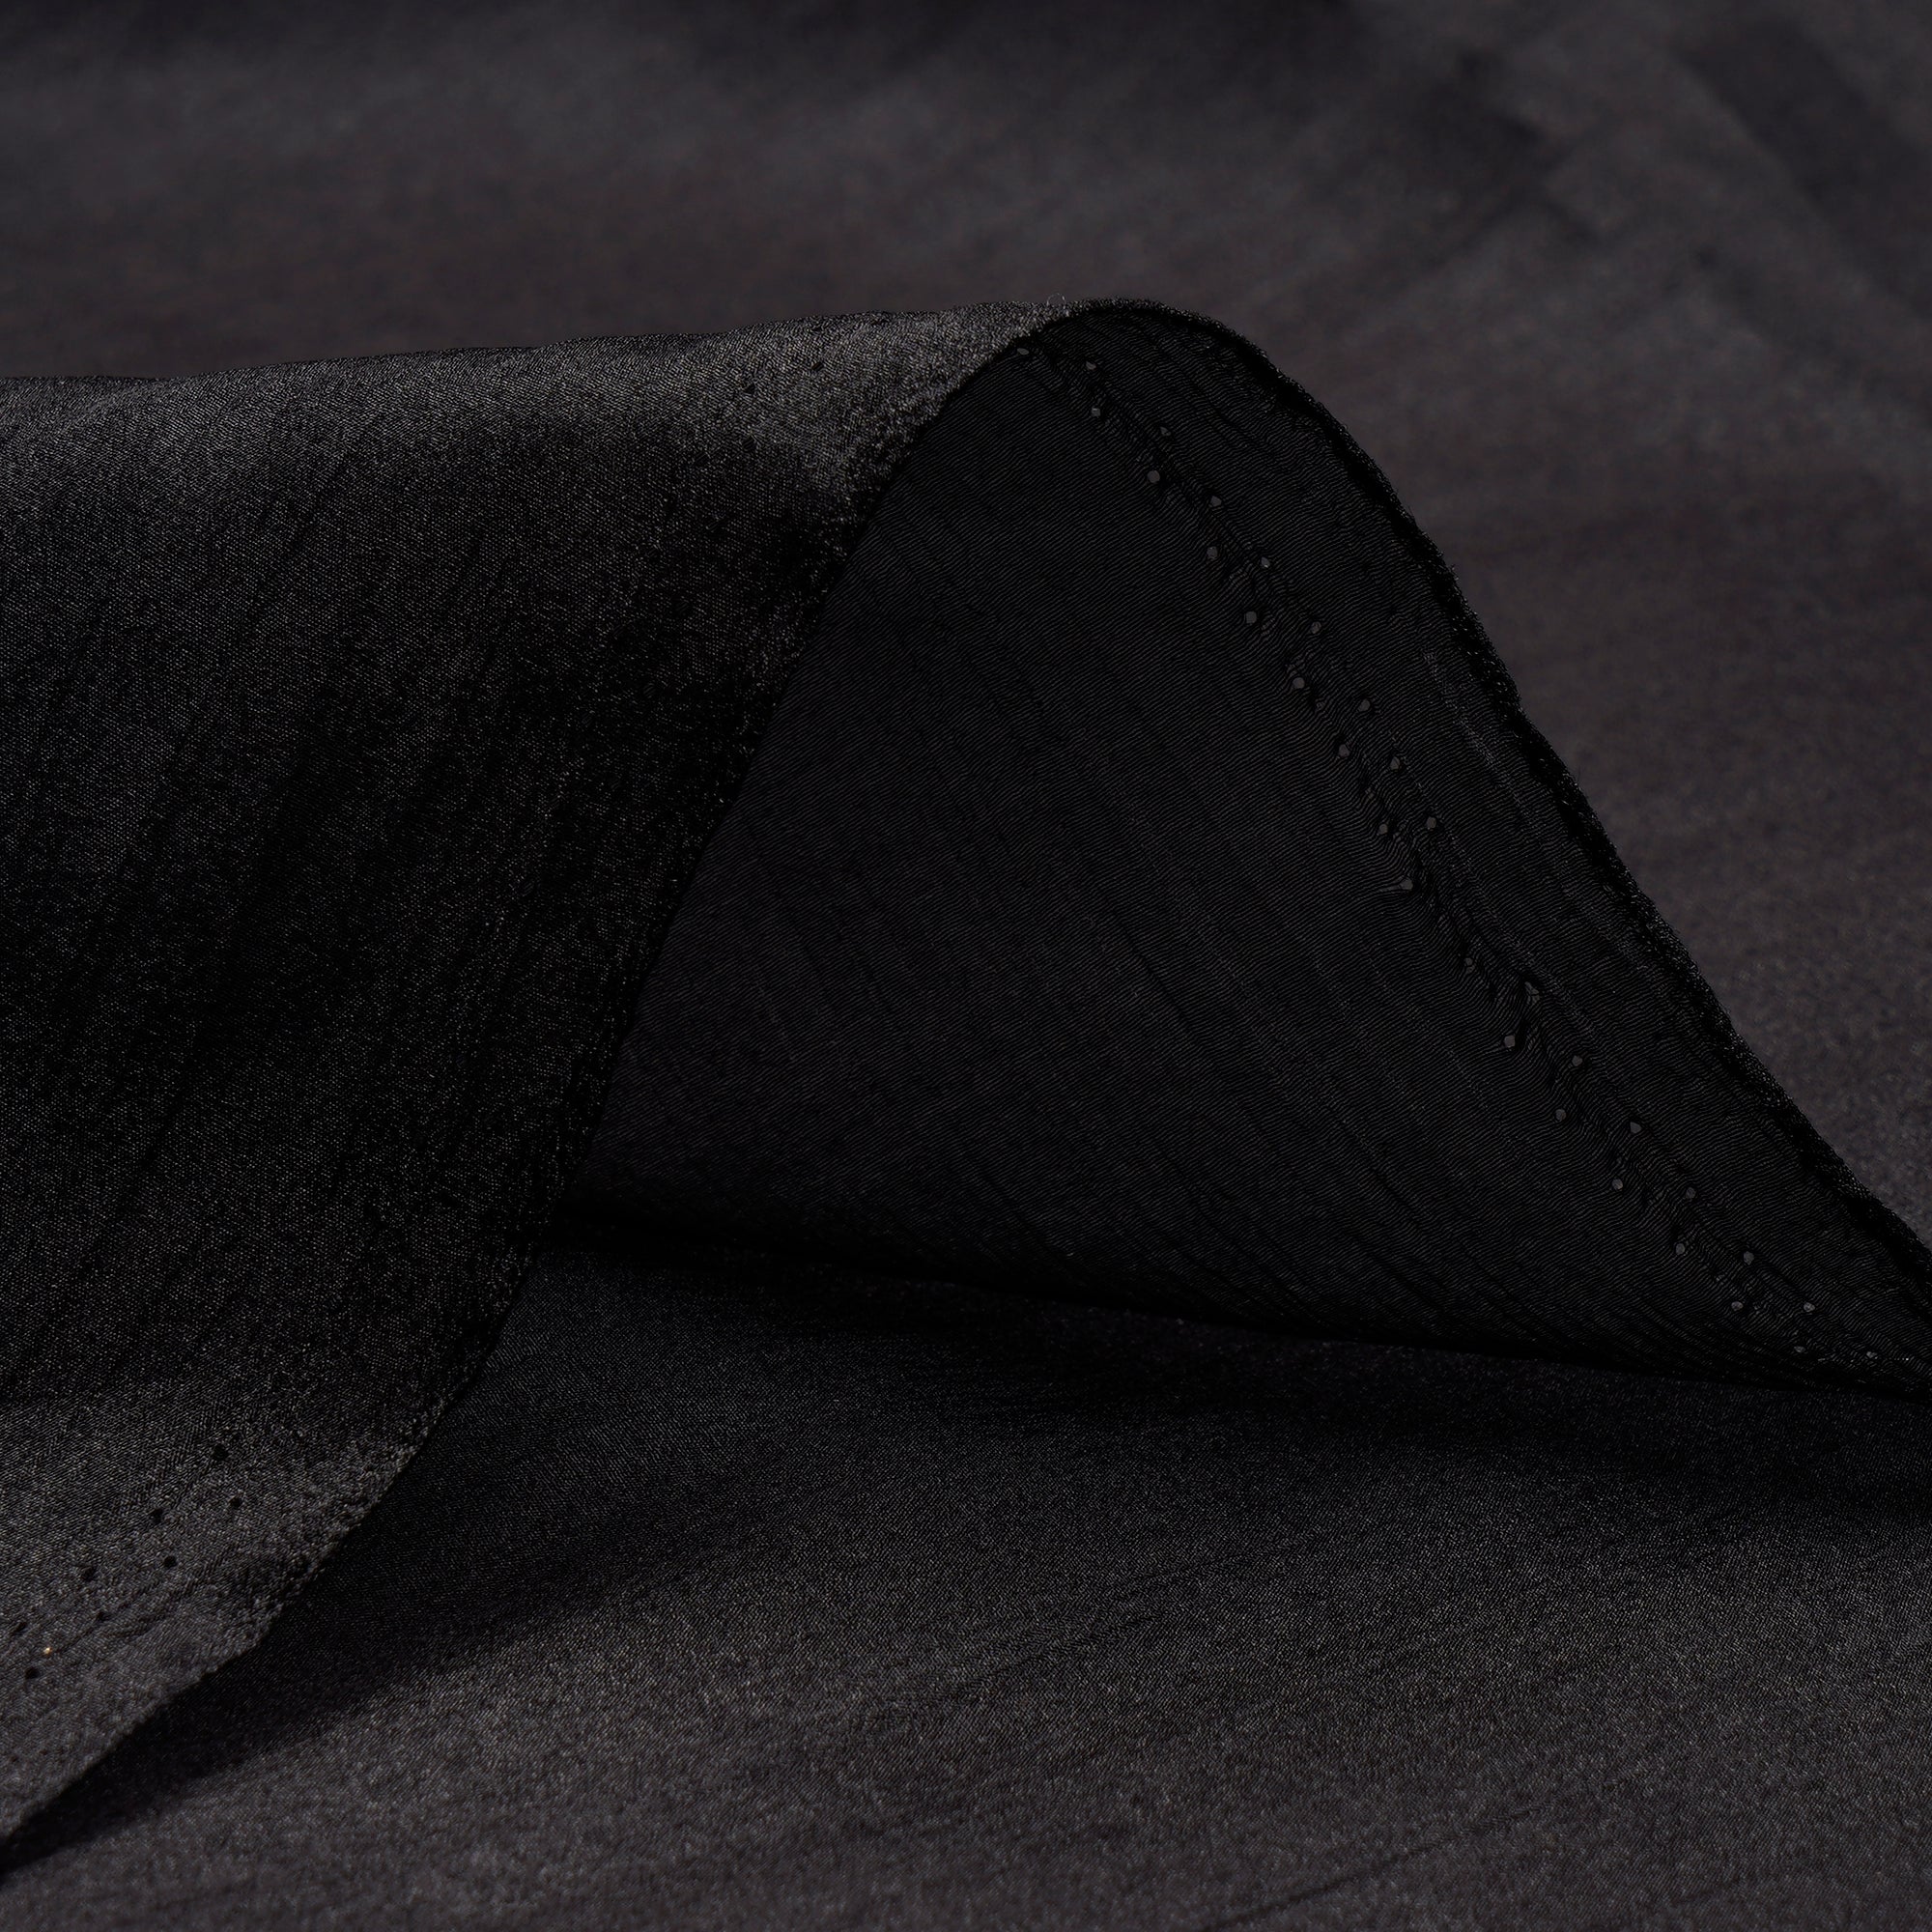 Black Imported Crinkle Chiffon Organza Fabric (60" Width)